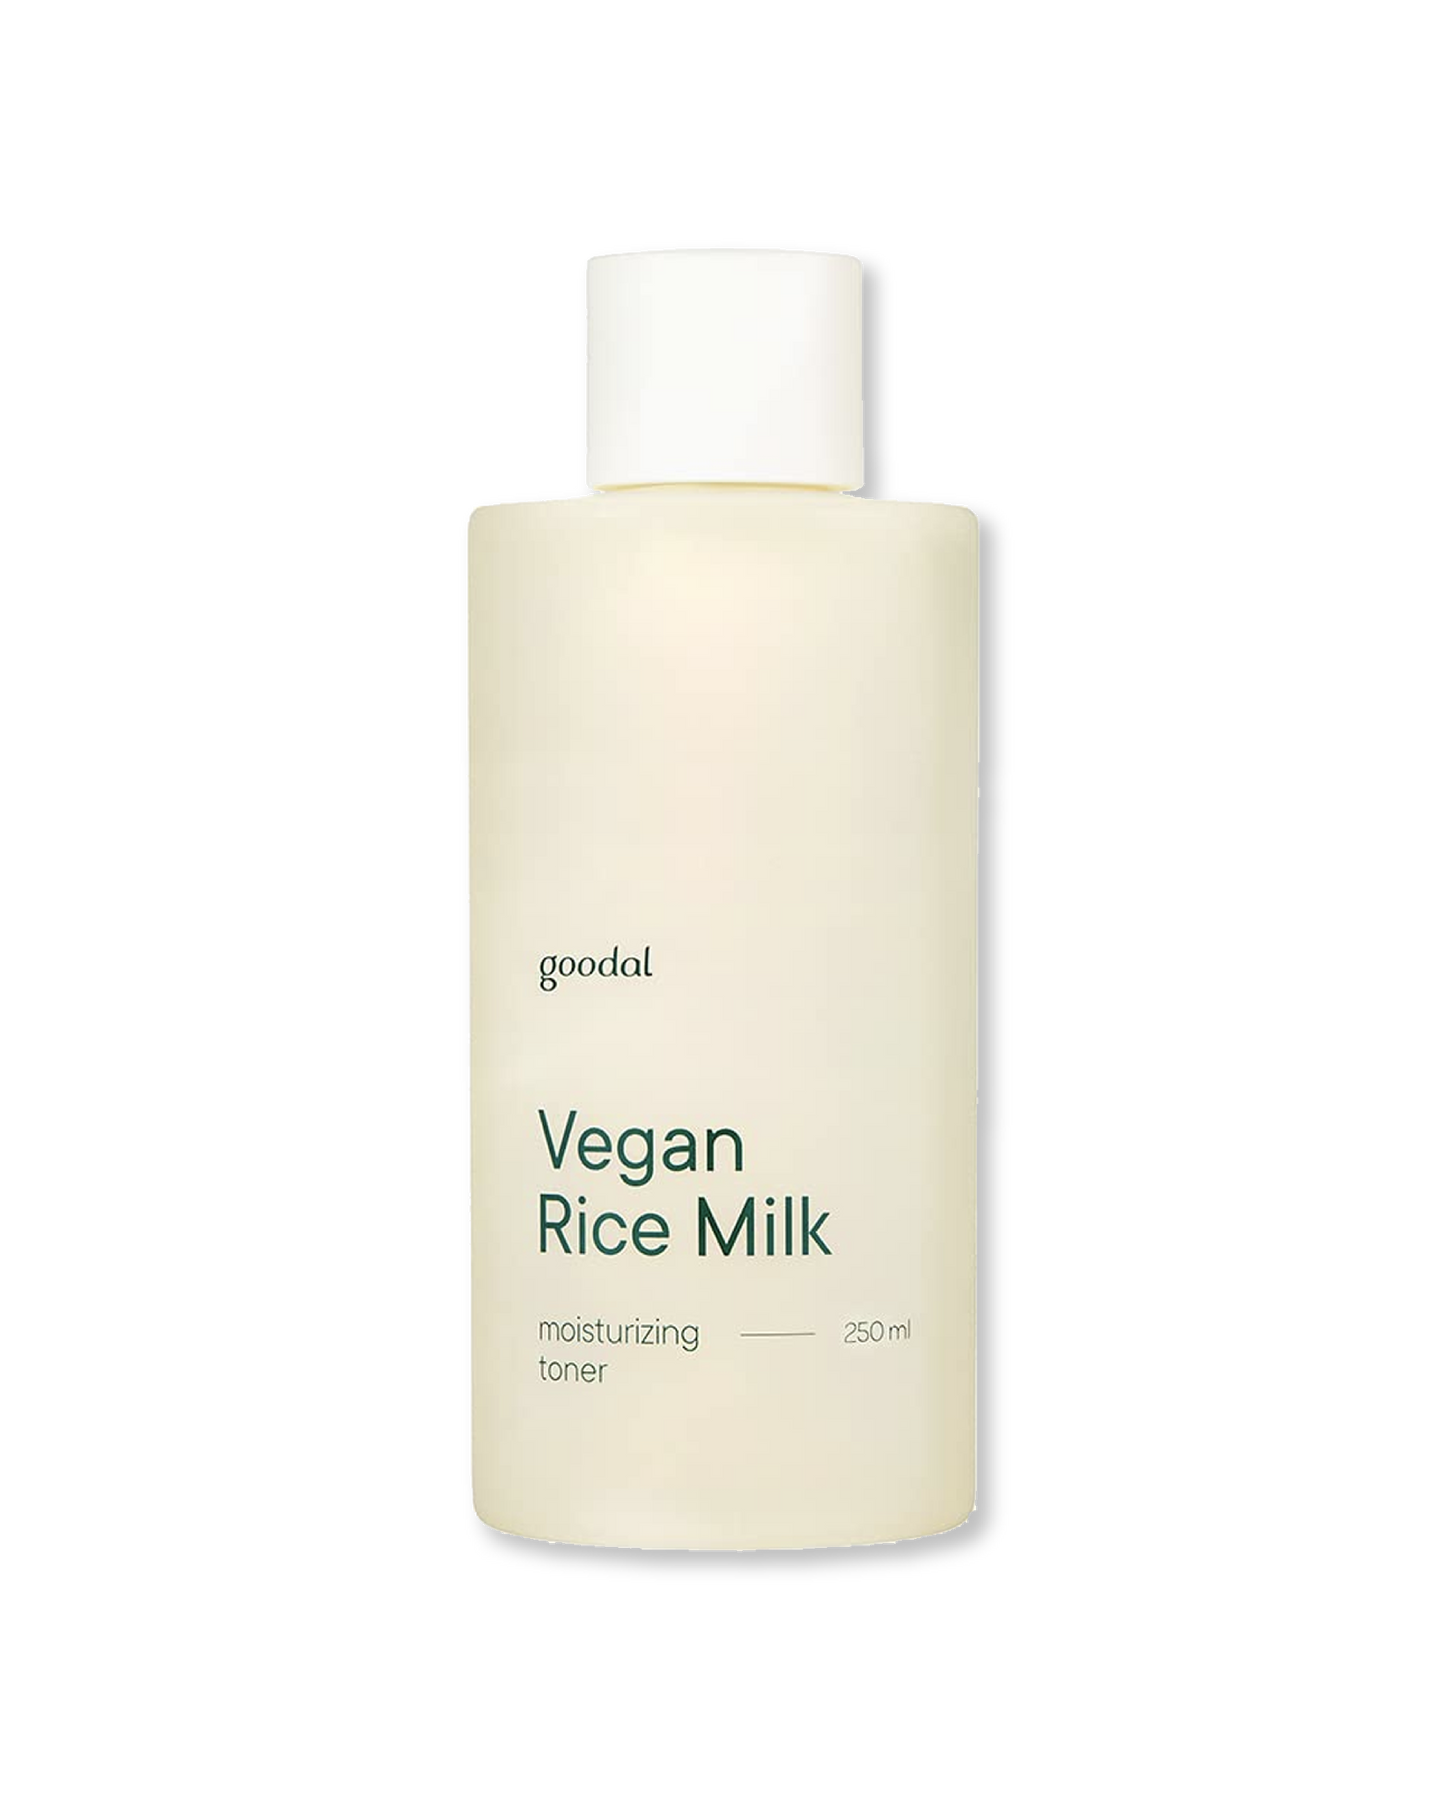 GOODAL Vegan Rice Milk Moisturizing Toner